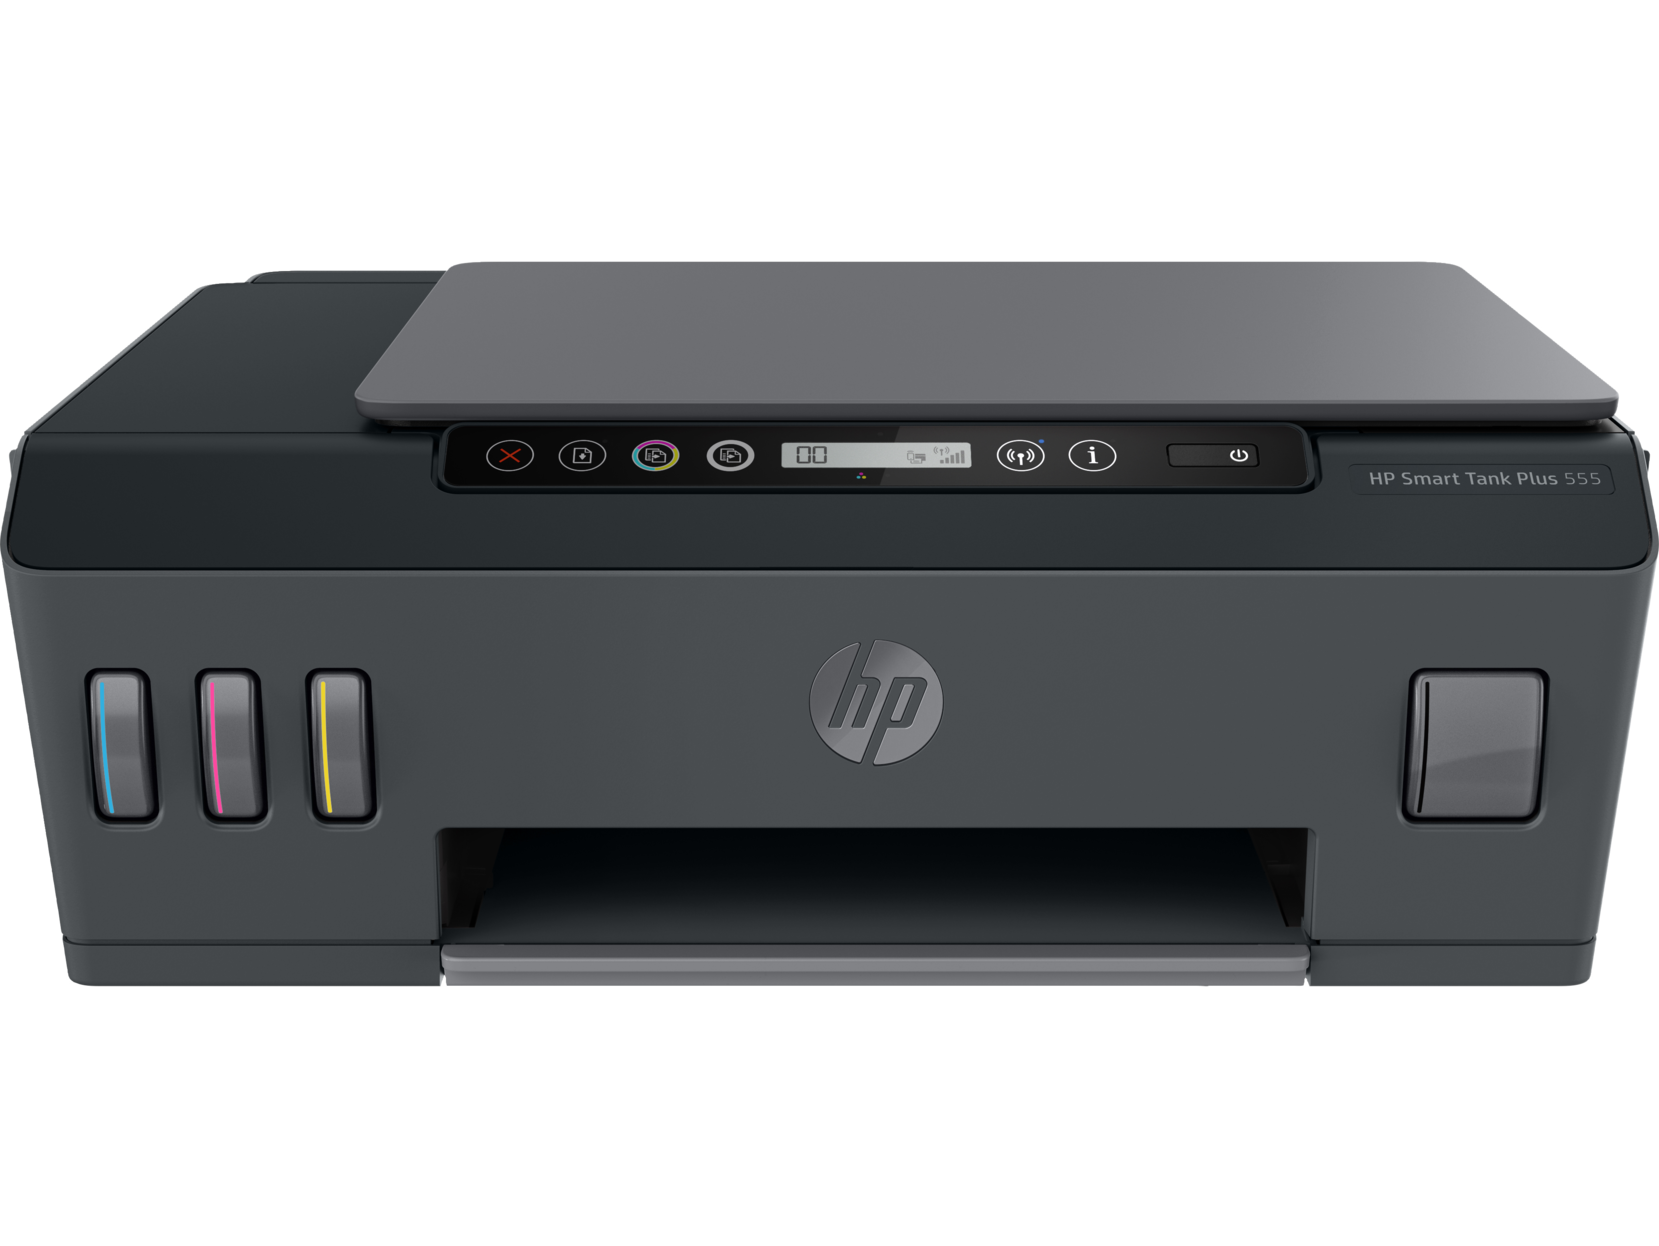 Impresora Tinta Hp smart tank 555 wifi copia escanea plus color imprime usb 2.0 direct app negro aio y bluetooth® de 11 4800 1200 a4